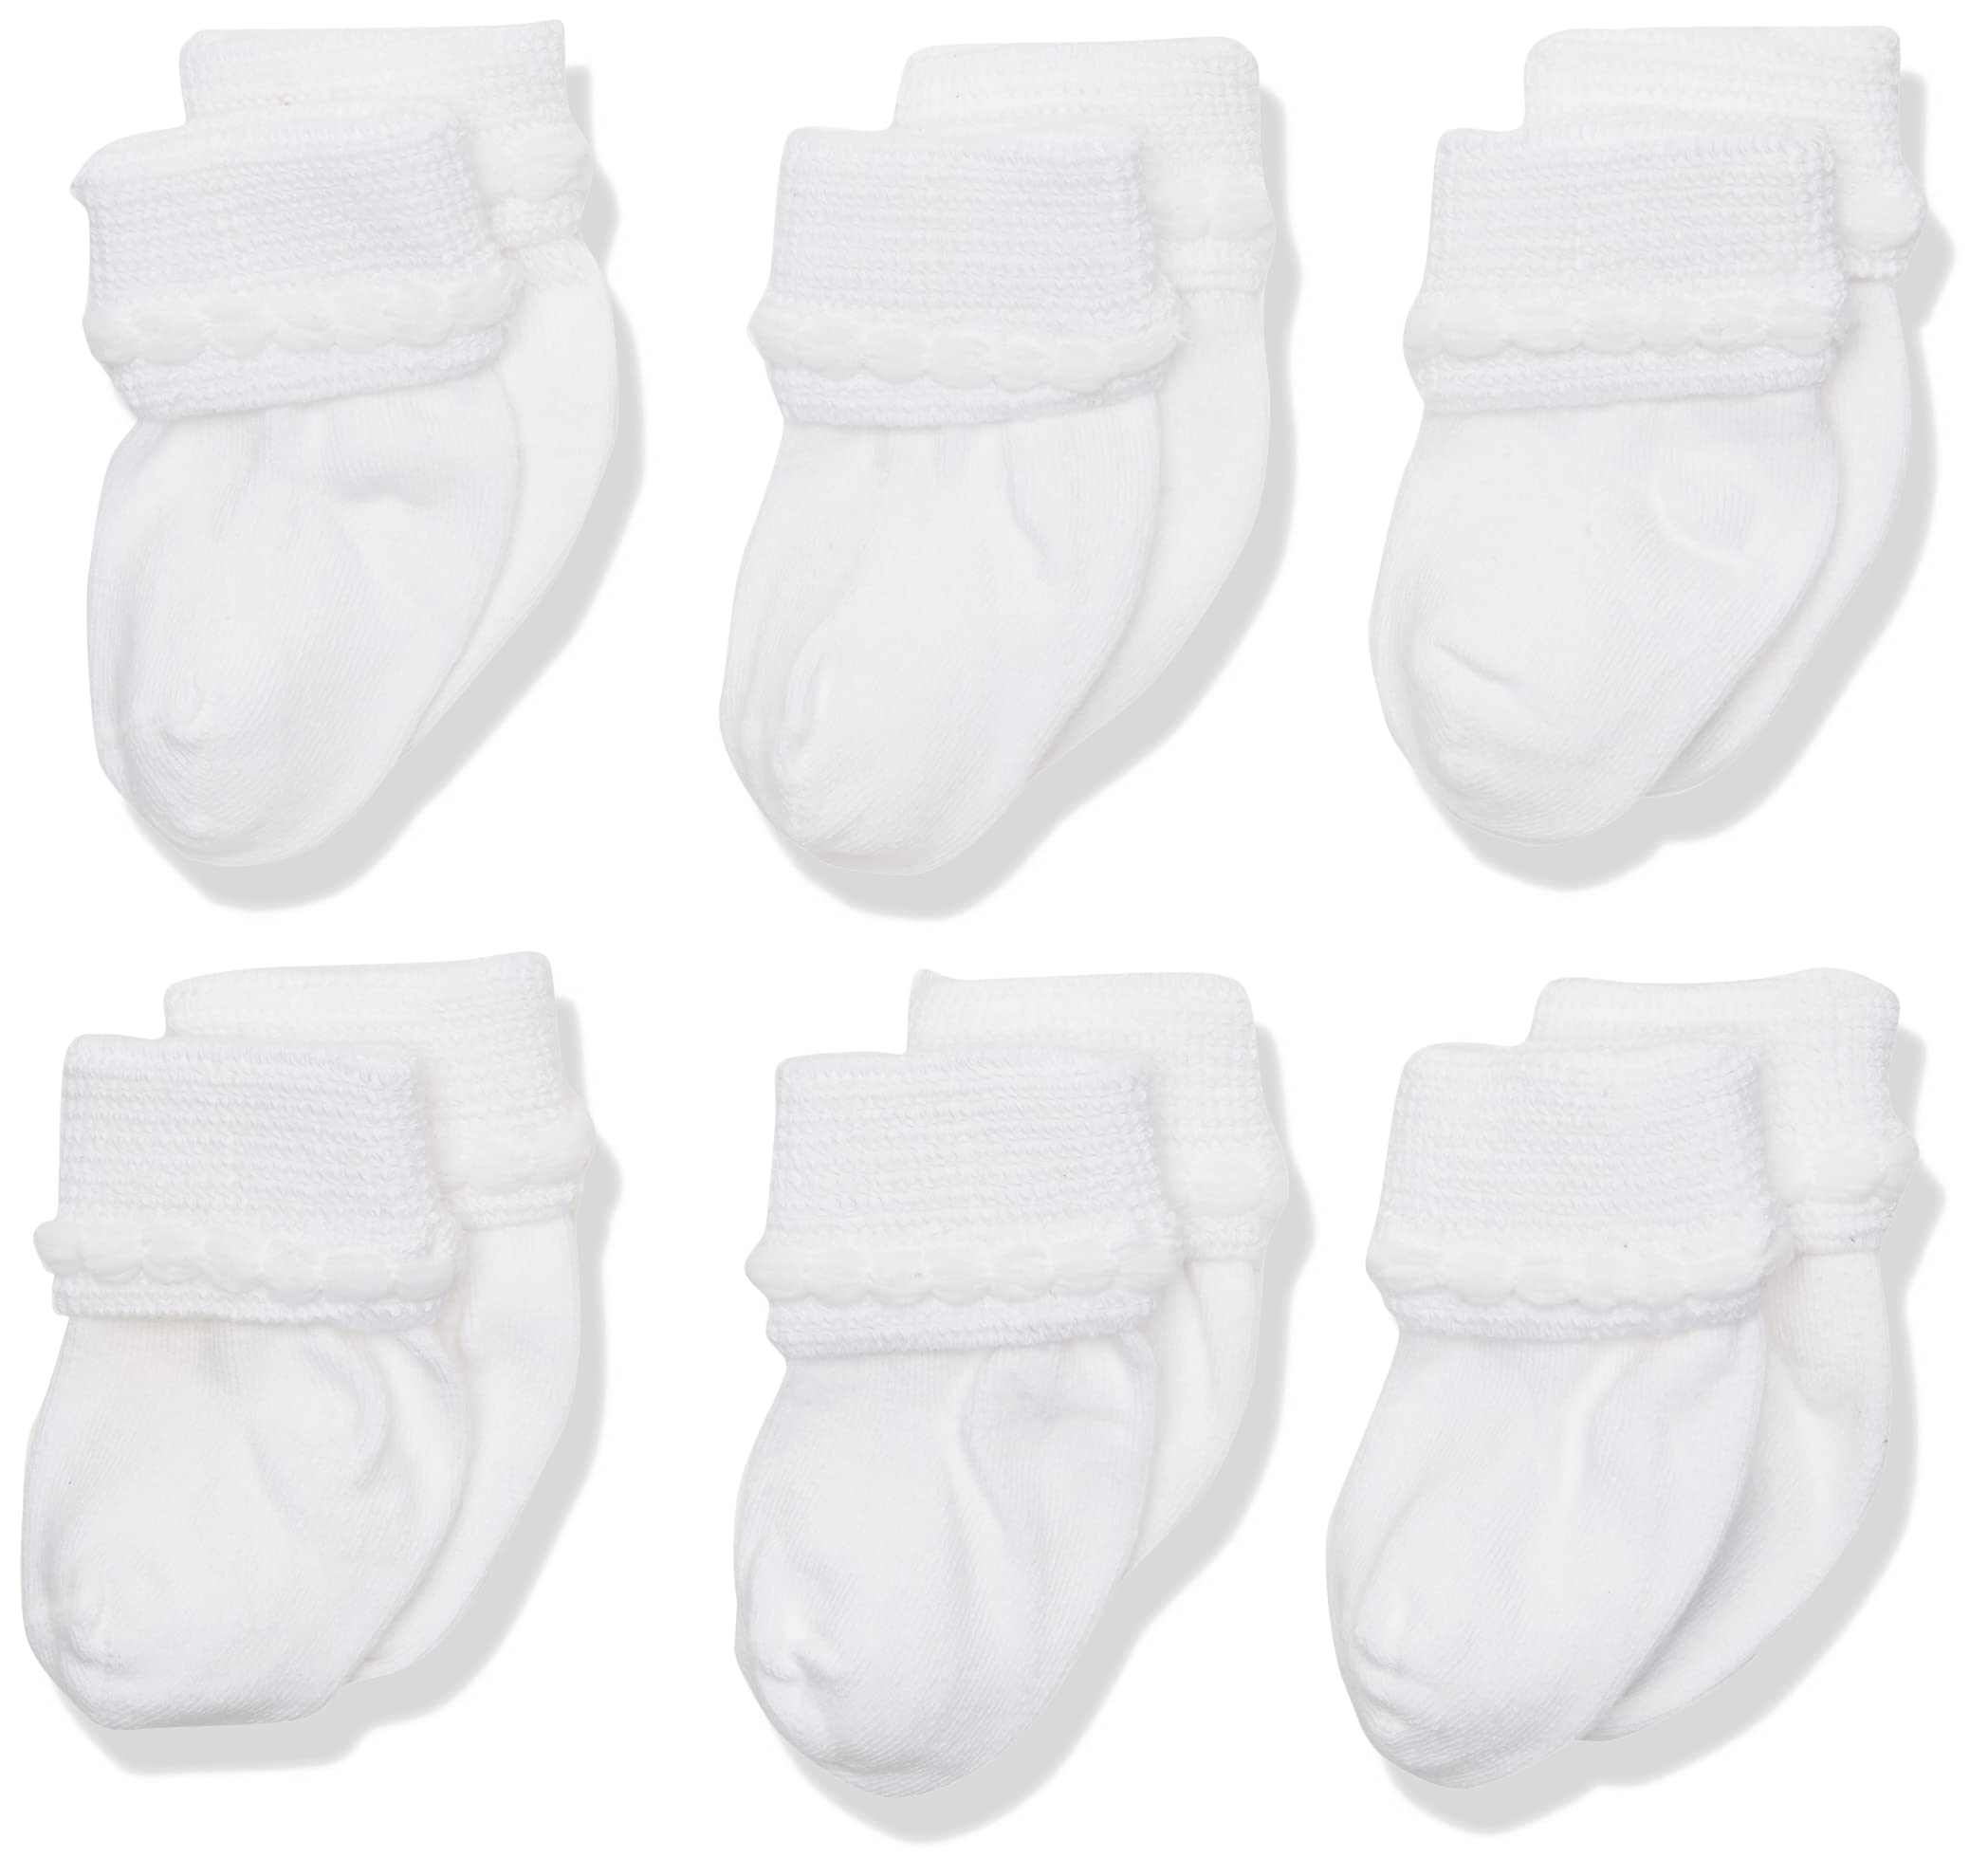 Jefferies Socks Unisex-Baby Newborn Bubble Stitch Rock-A-Bye Bootie 6 Pair Pack